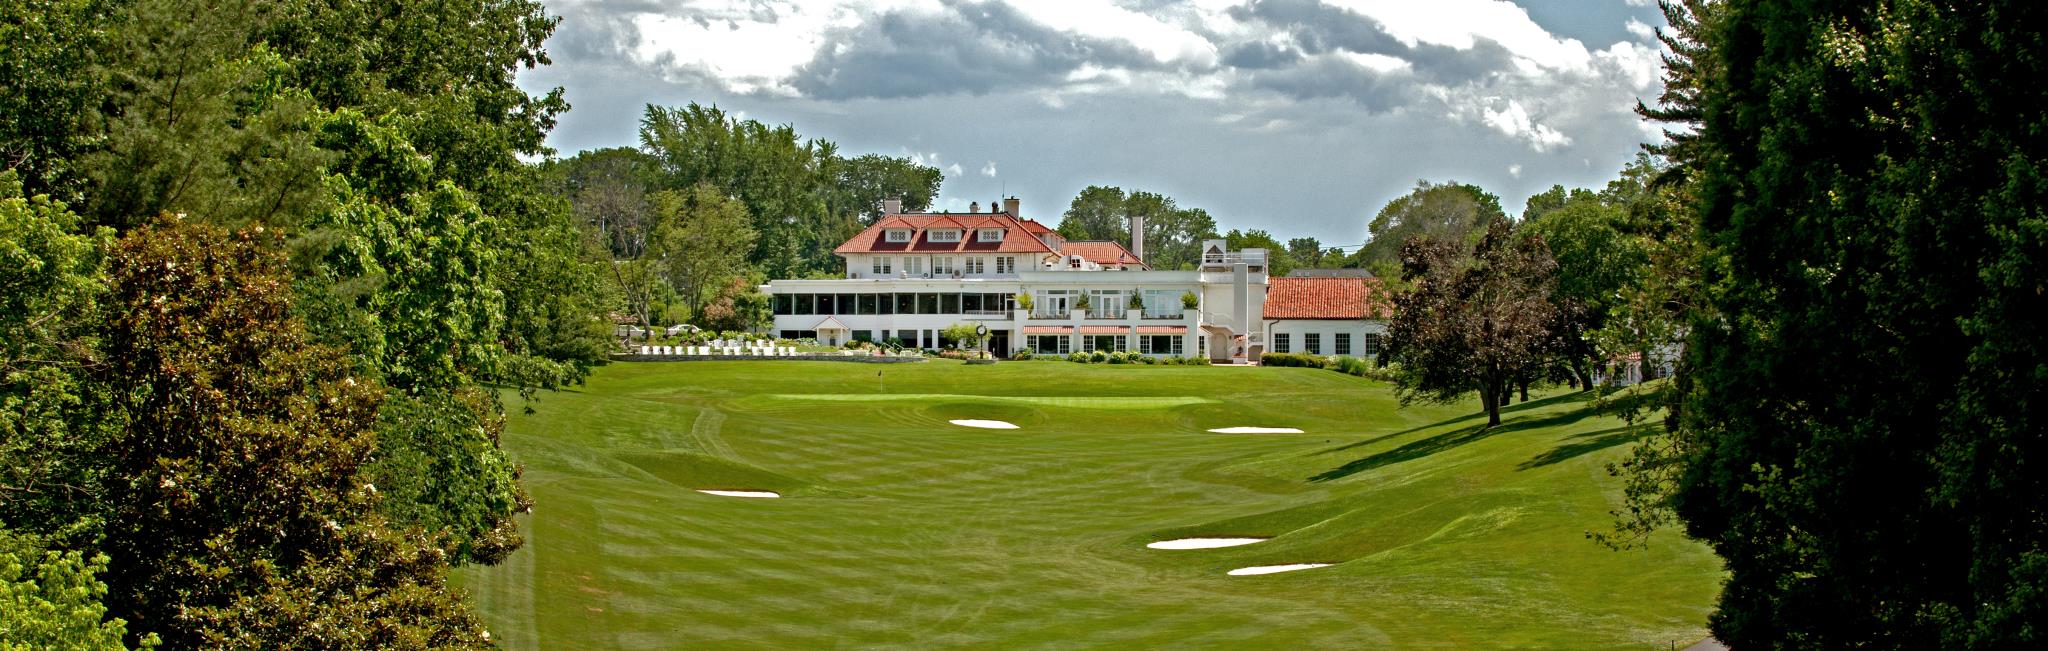 Columbia Country Club | Maryland | GolfBiz